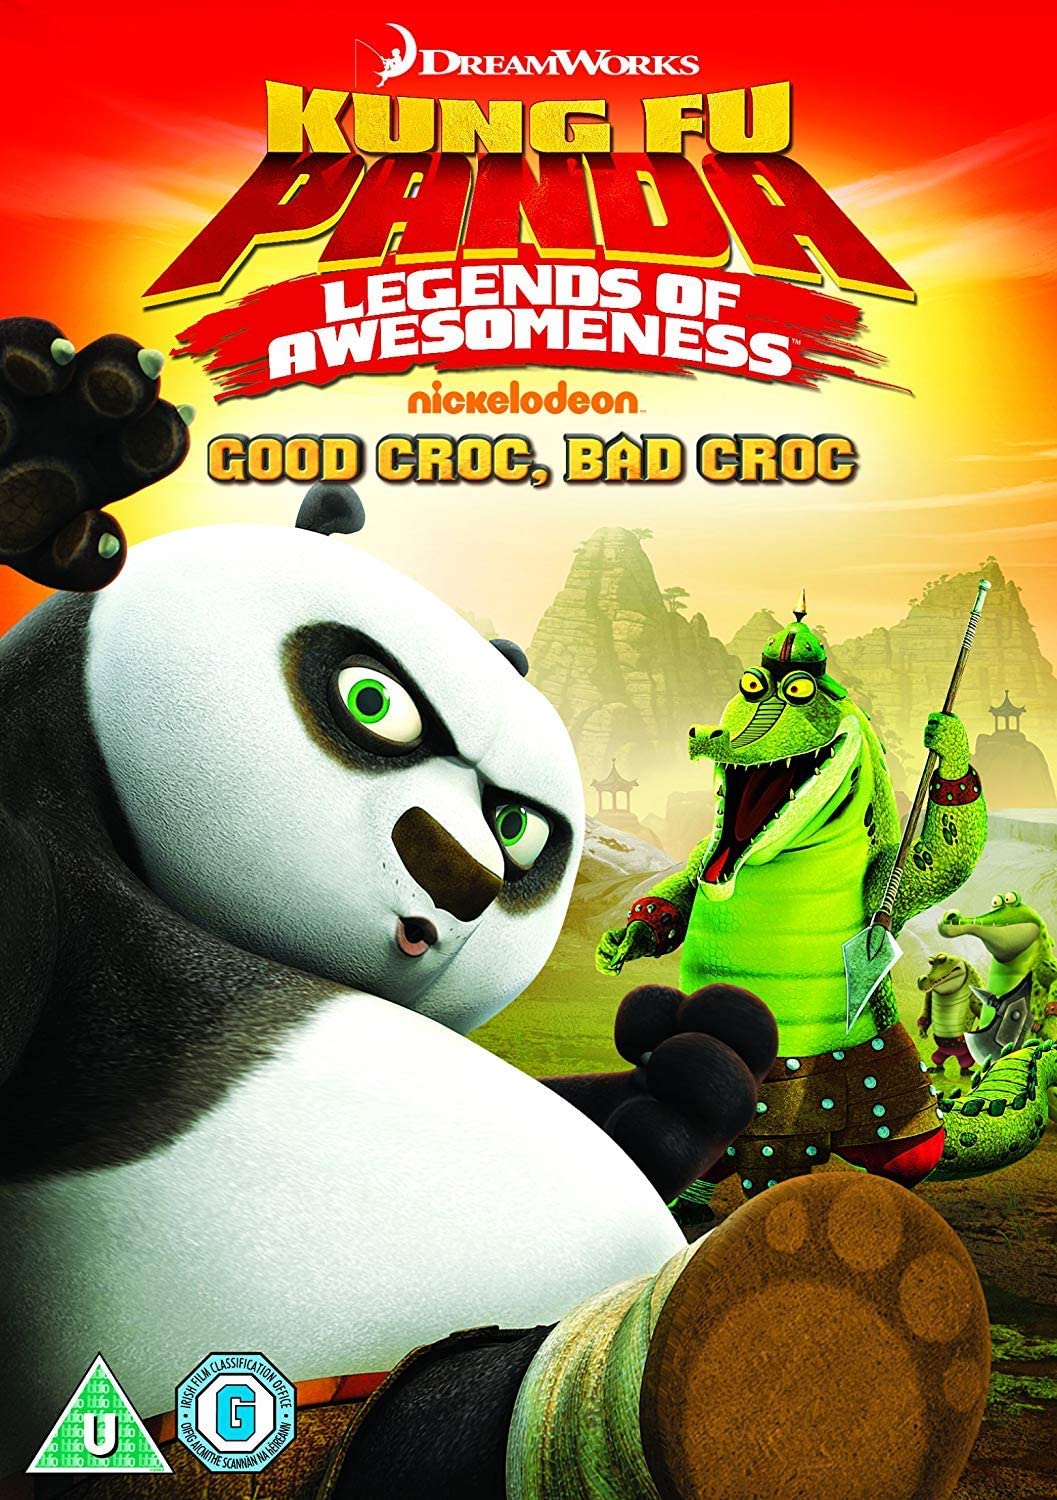 Kung Fu Panda: Good Croc, Bad Croc (Dreamworks) (DVD)